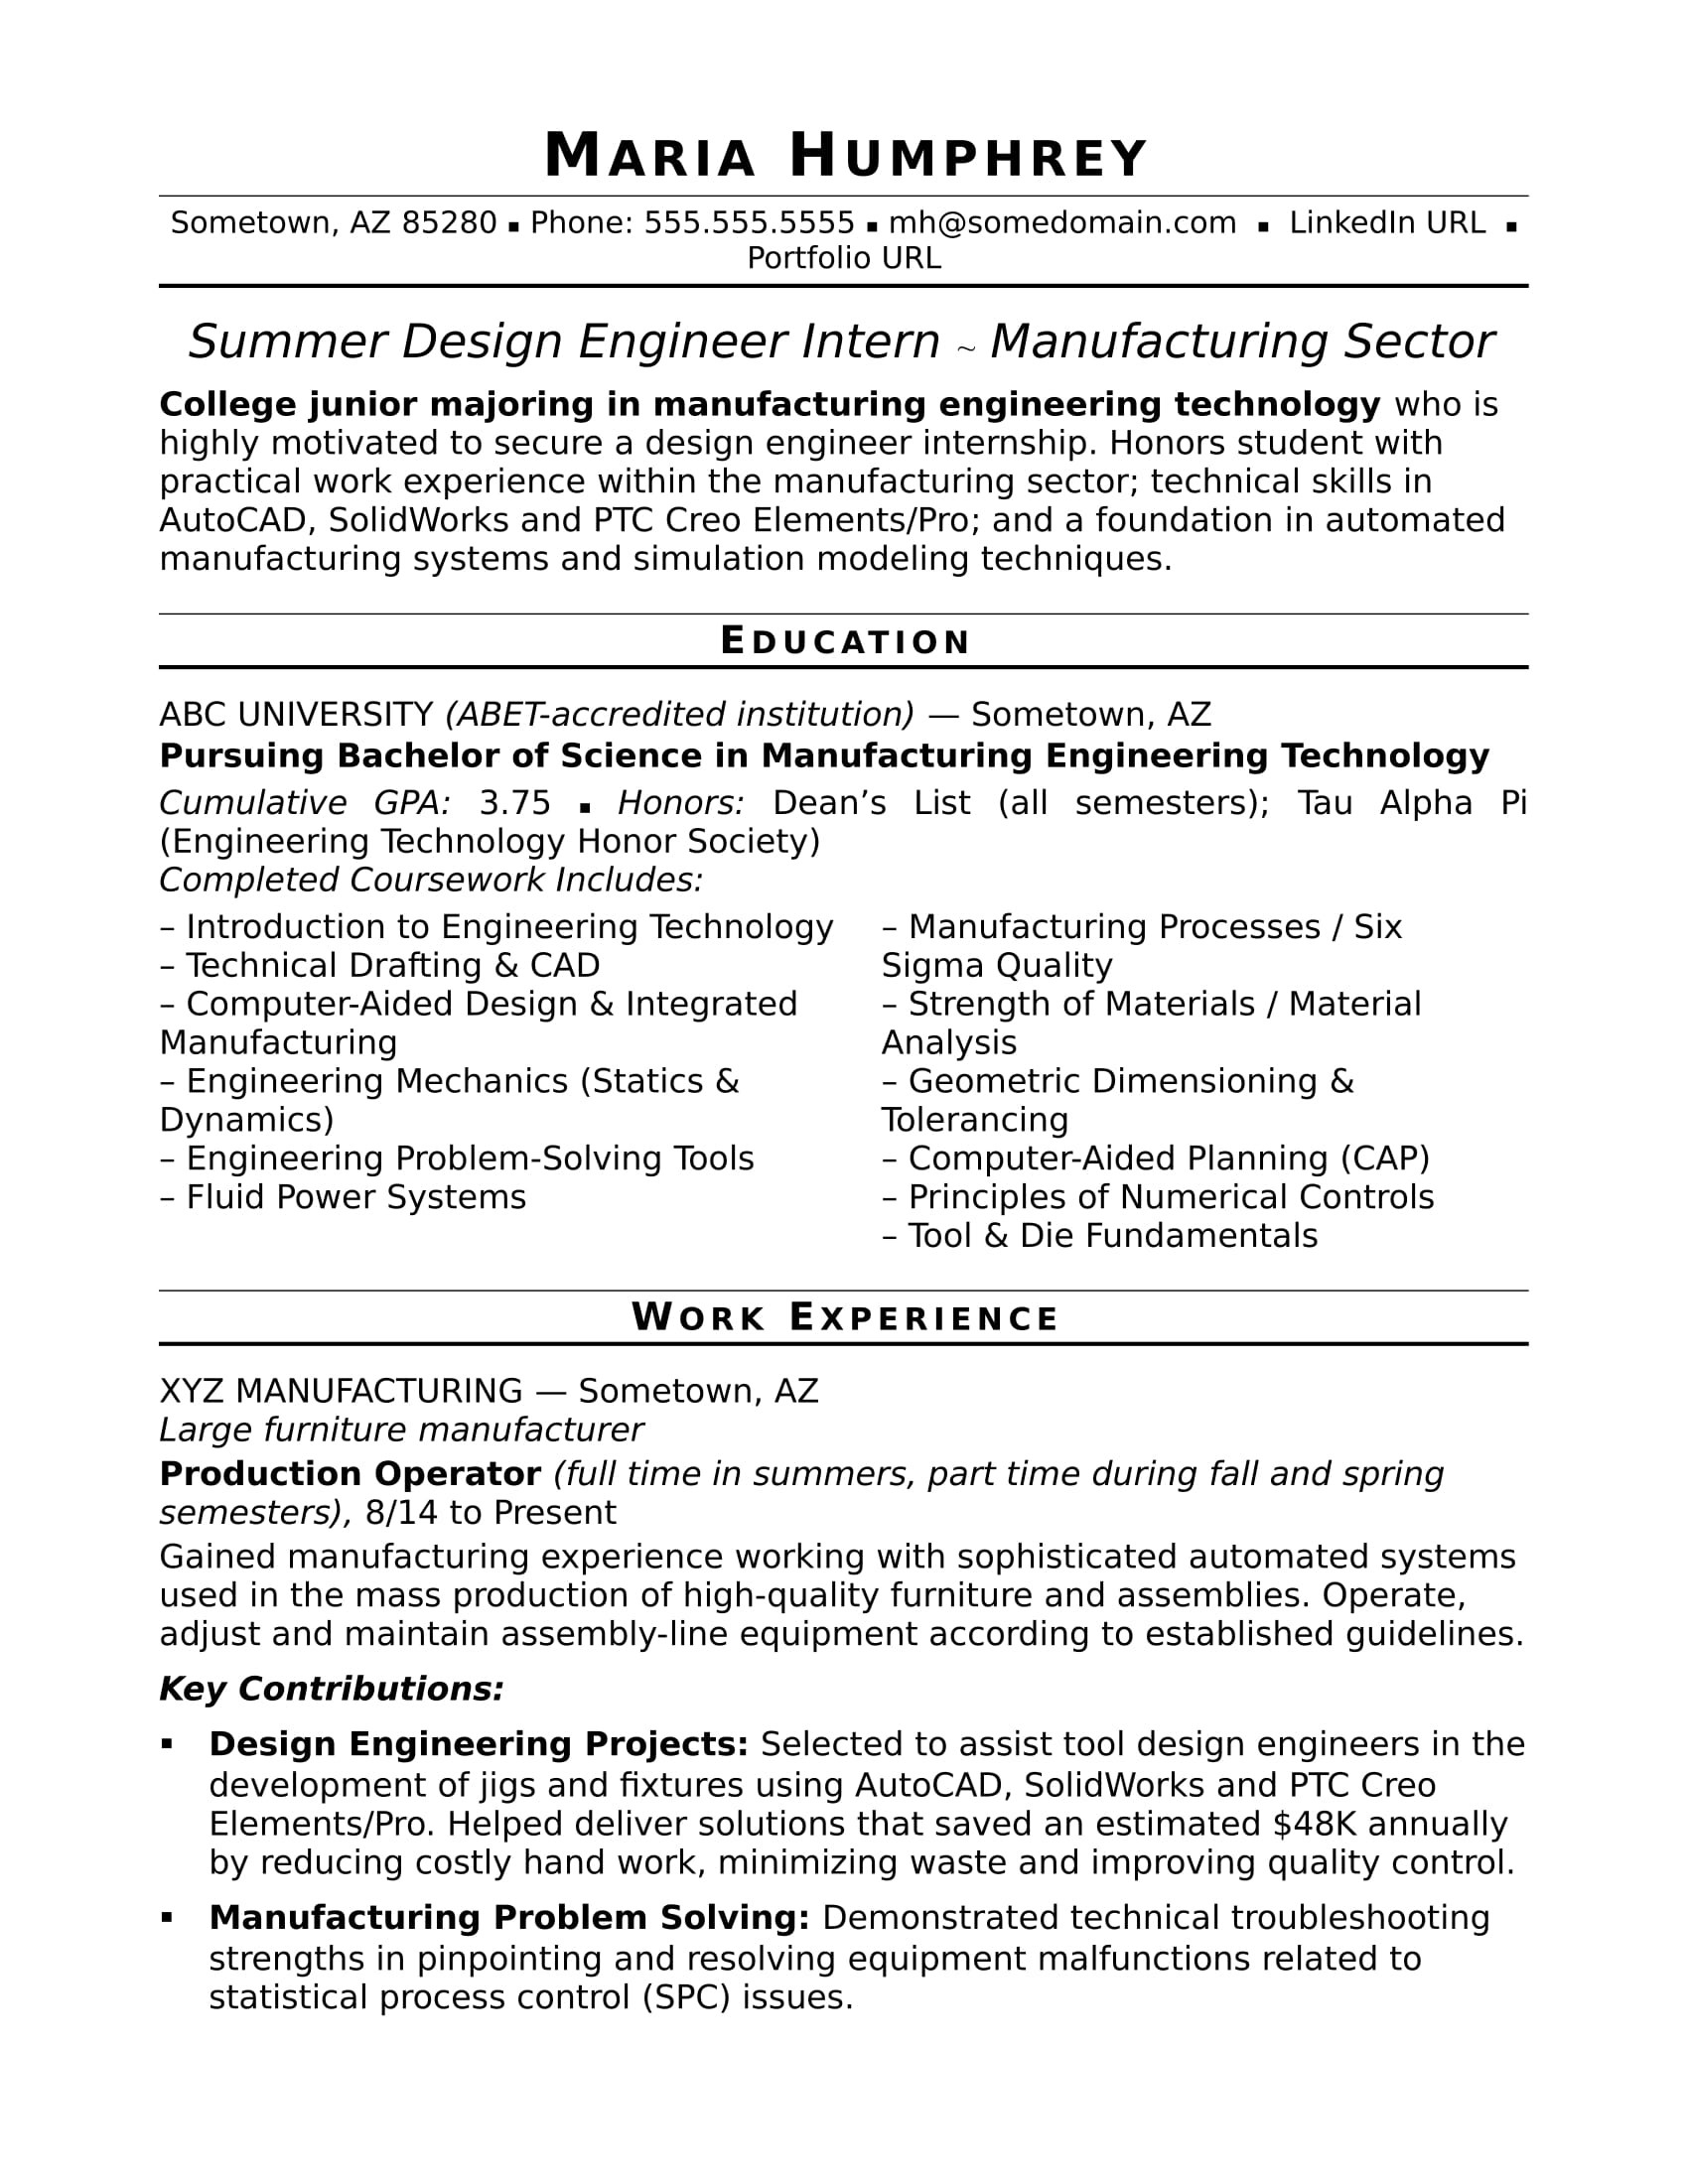 Design Engineer Resume Sample for Freshers Sample Resume for An Entry-level Design Engineer Monster.com